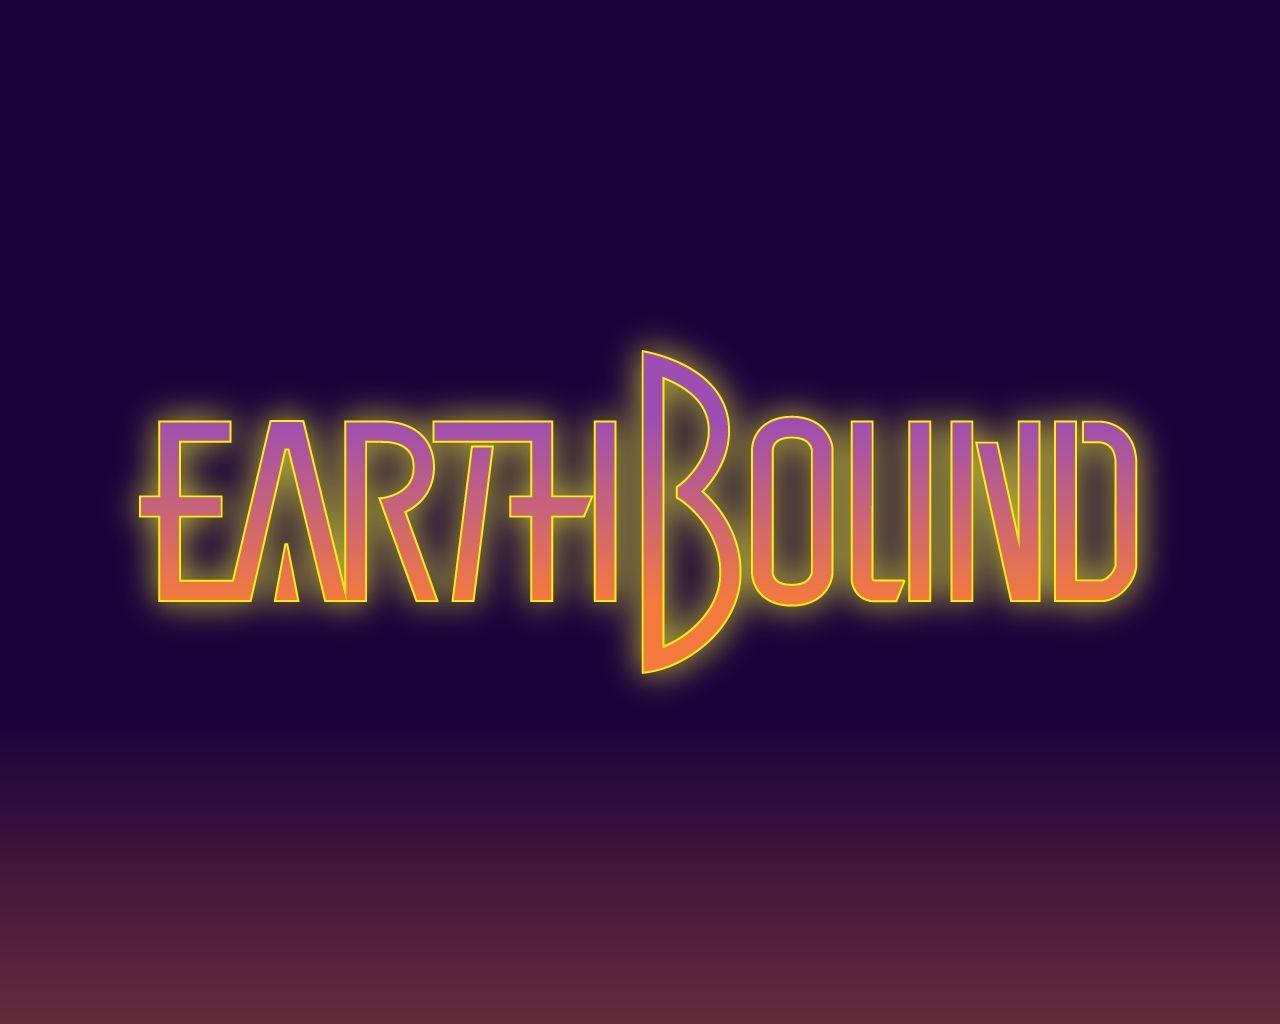 Earthbound Logo - Wallpaper : Earthbound, SNES, game logo 1280x1024